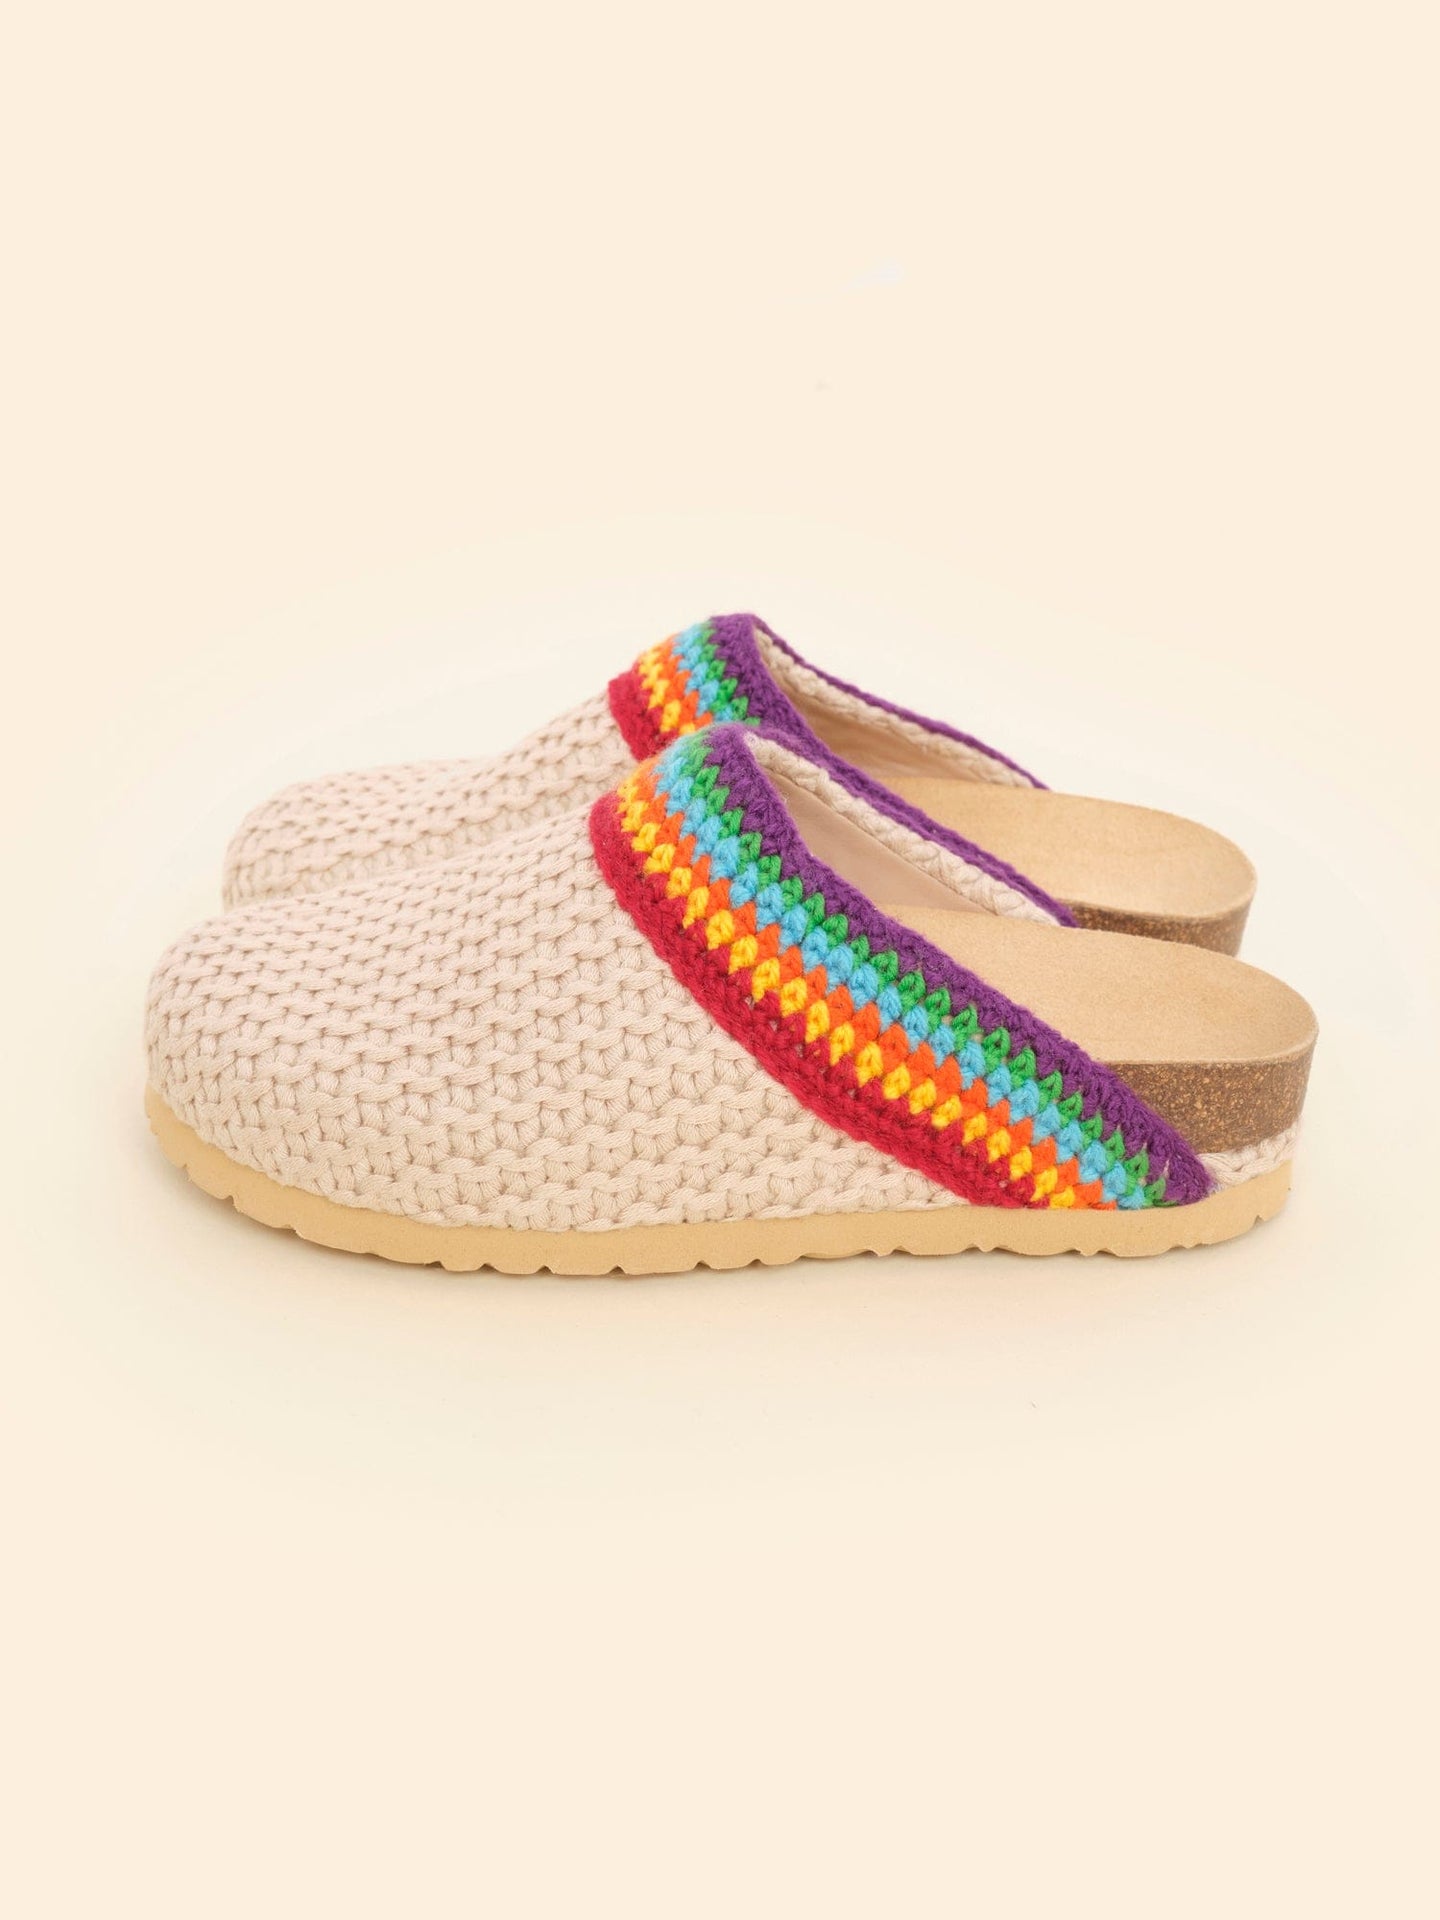 AMROSE Footwear AMROSE Rainbow Crochet Clogs